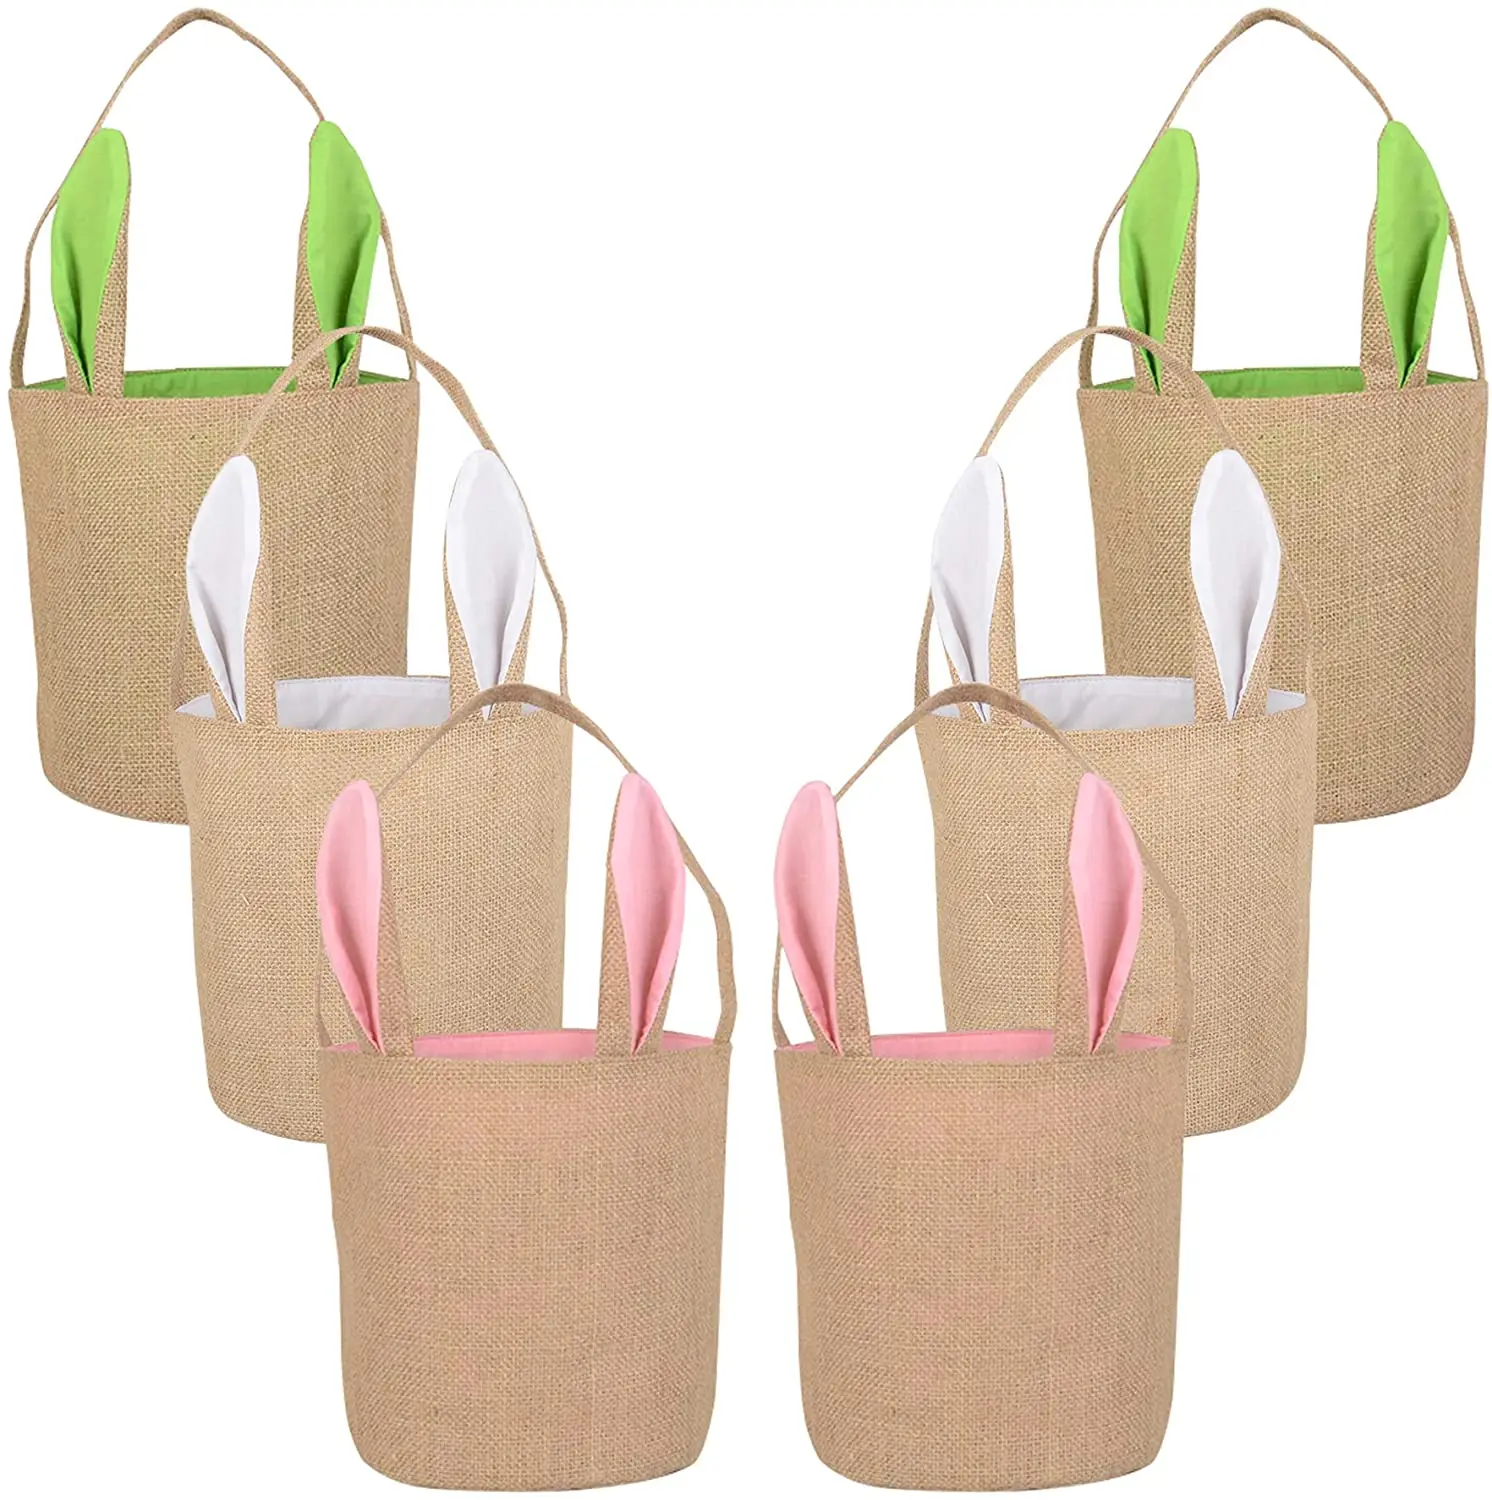 Easter Bunny Burlap Bag Baskets Jute. Easter Egg Hunt Bags. Brand New